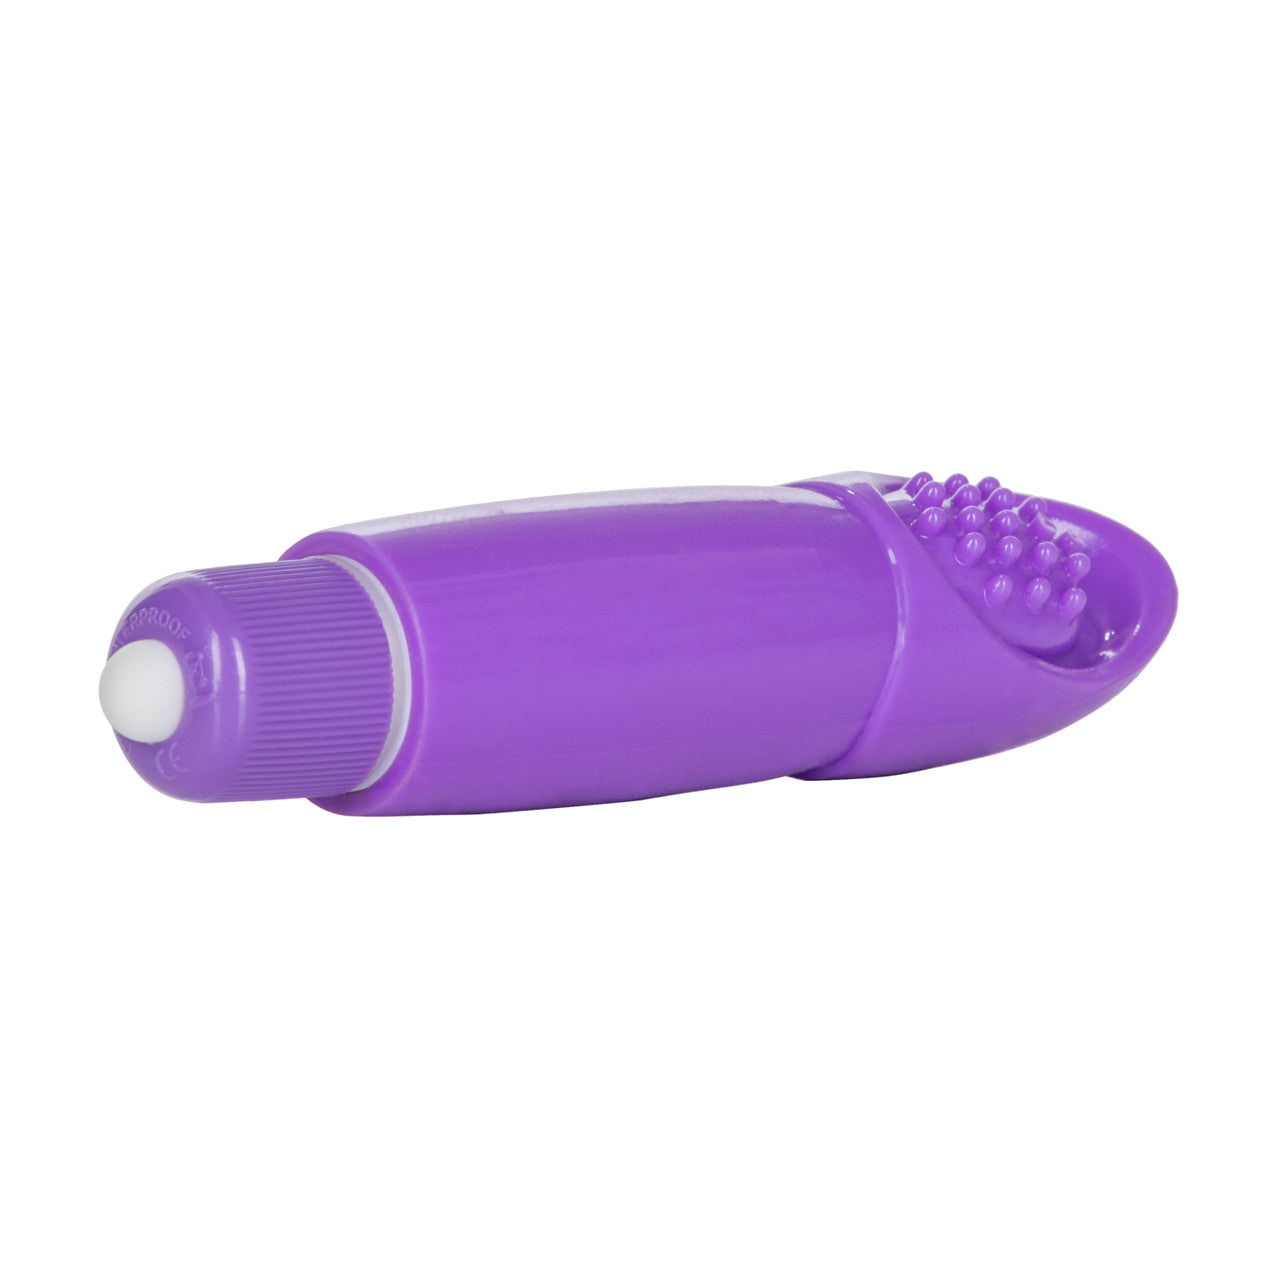 CalExotics Zingers Purple Clitoral Stimulator